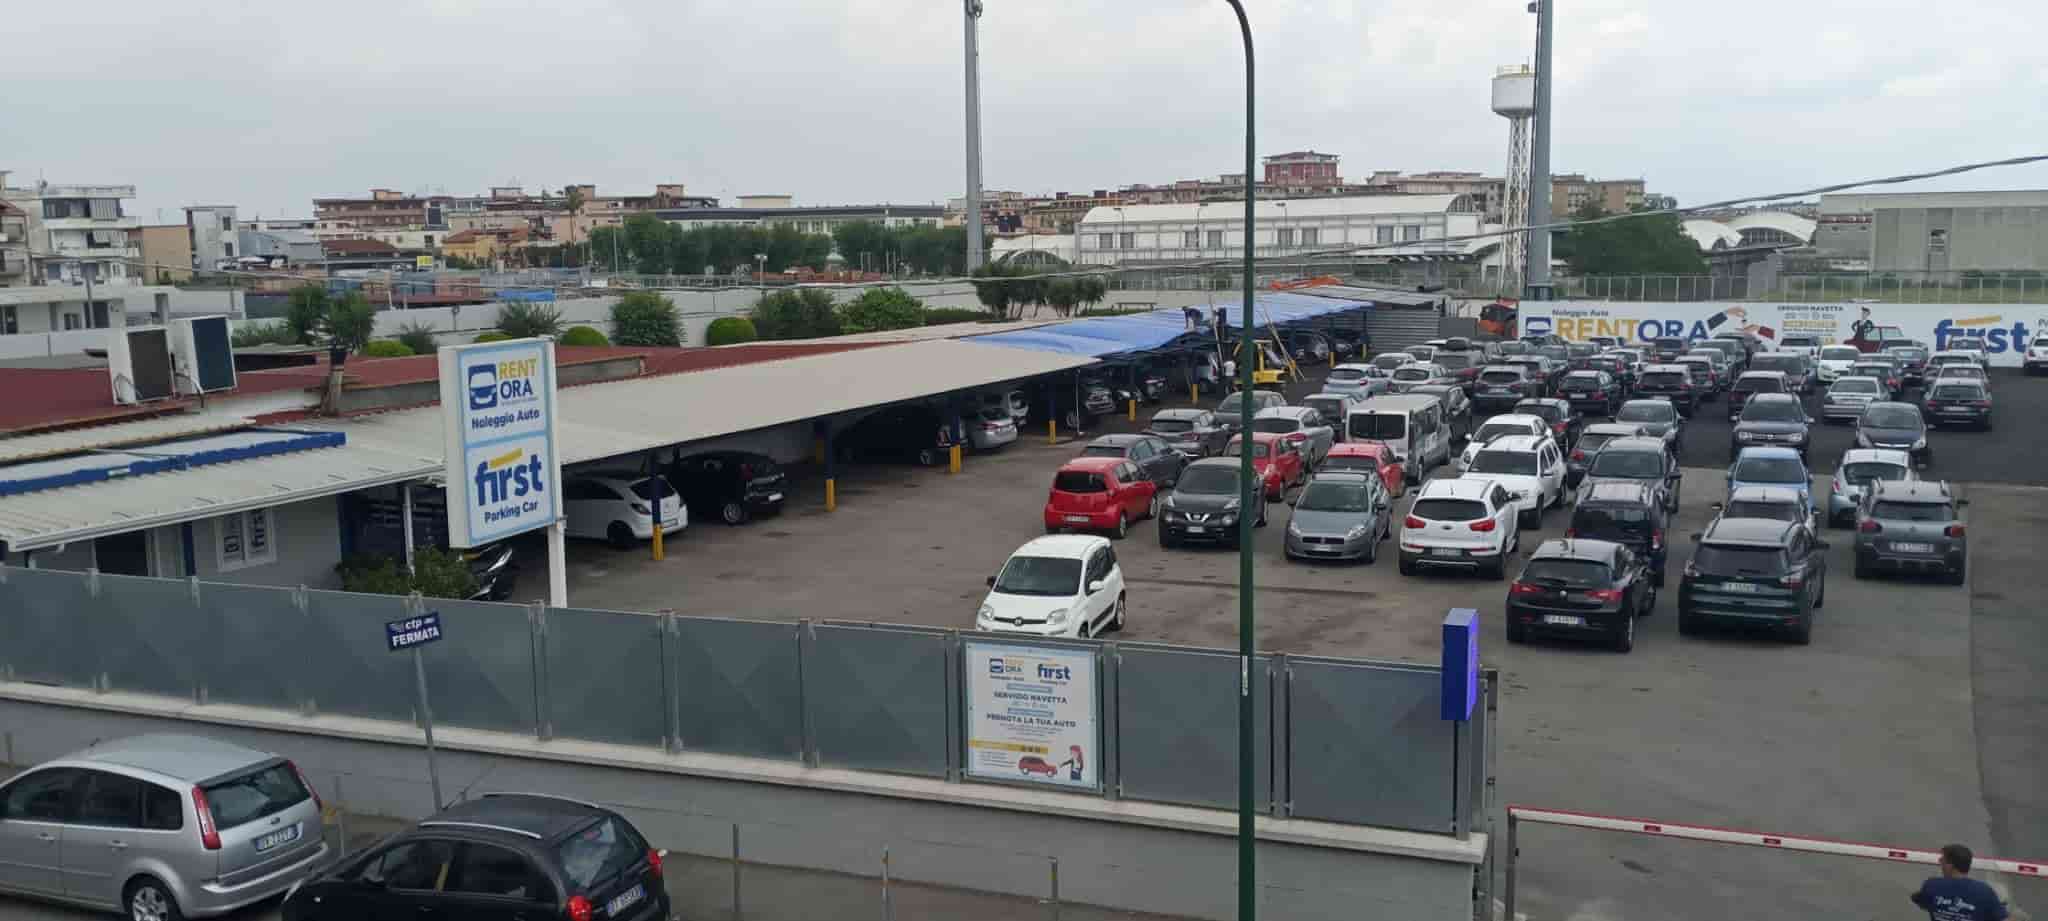 Ingreeso First Parking - Aeroporto Napoli Capodichino